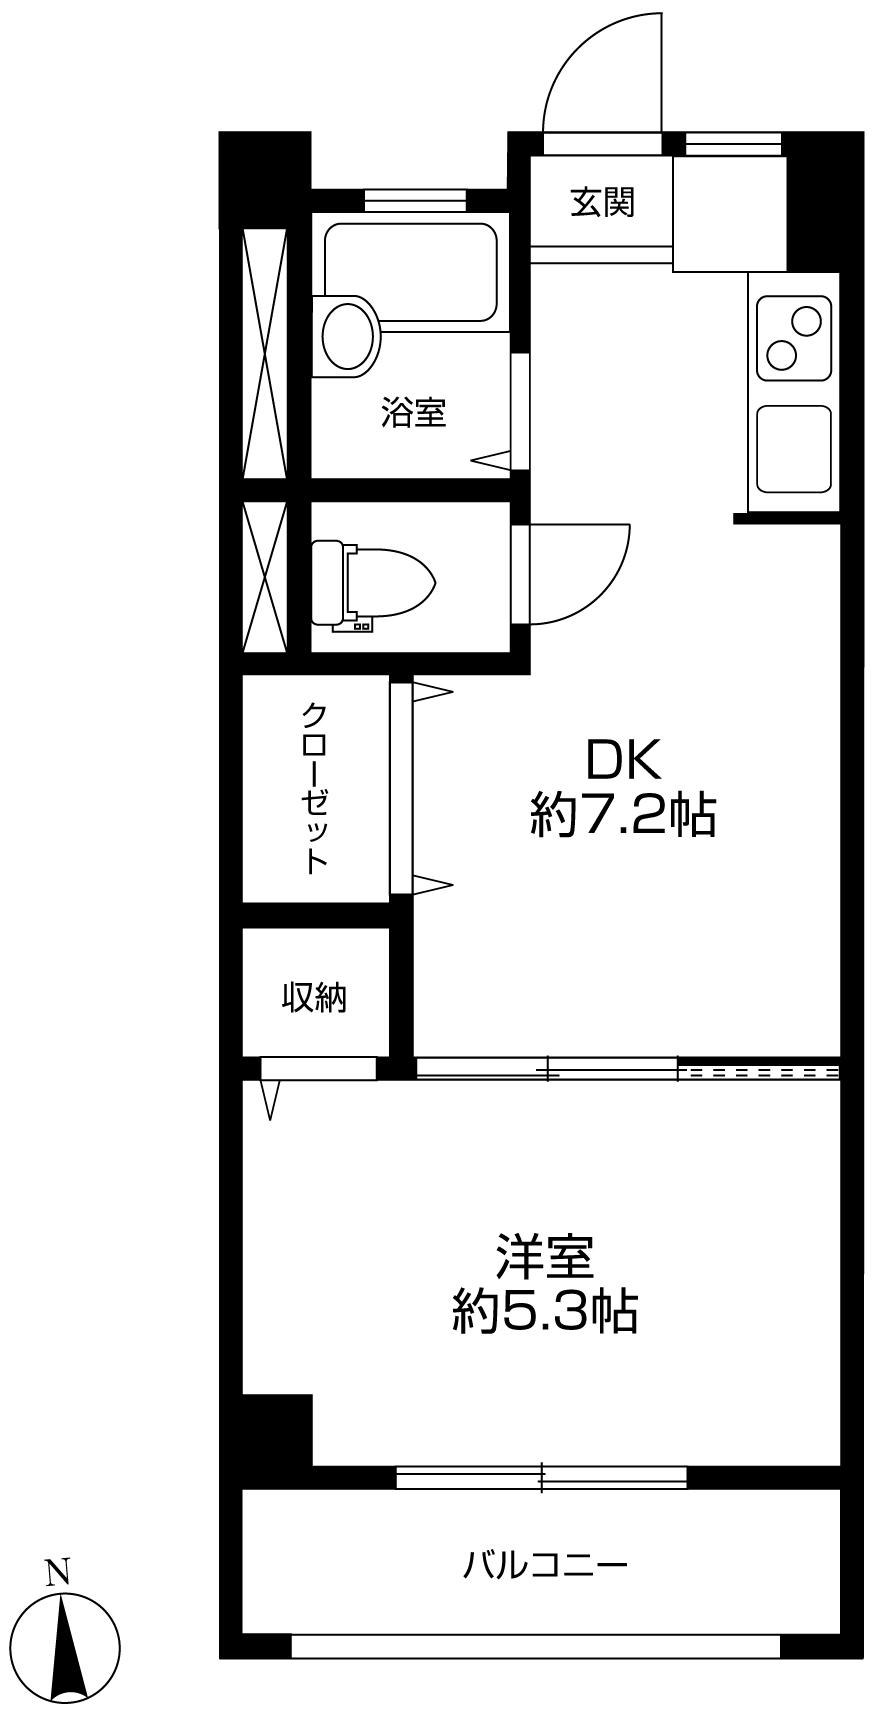 Floor plan. 1DK, Price 11.8 million yen, Occupied area 29.64 sq m , Balcony area 3.42 sq m